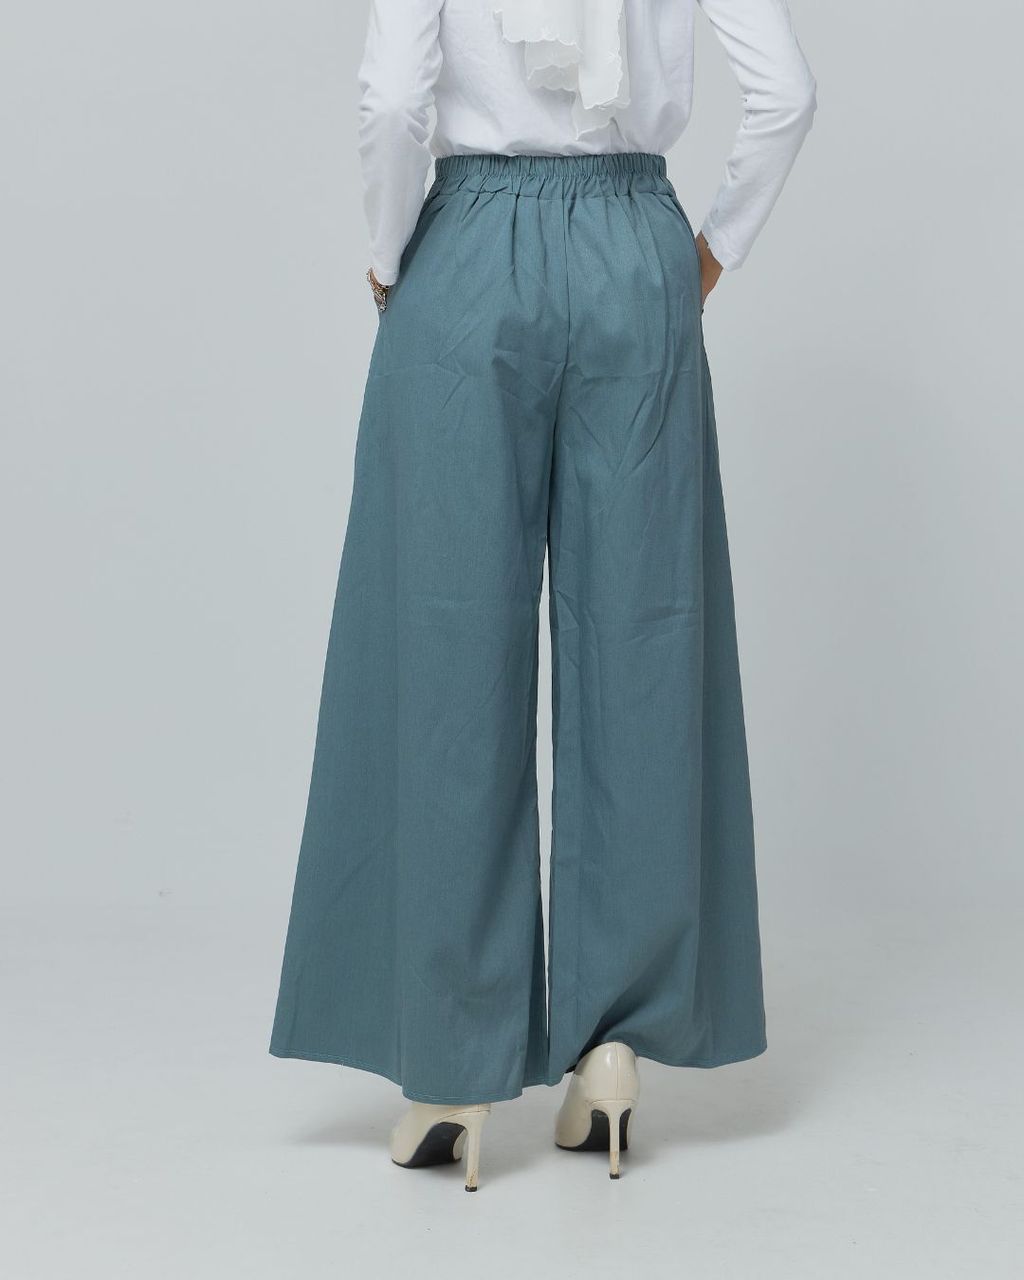 haura-wear-sierra-mix-cotton-skirt-high-waist-cotton-long-pants-seluar-muslimah-seluar-perempuan-palazzo-pants-sluar-skirt (14)